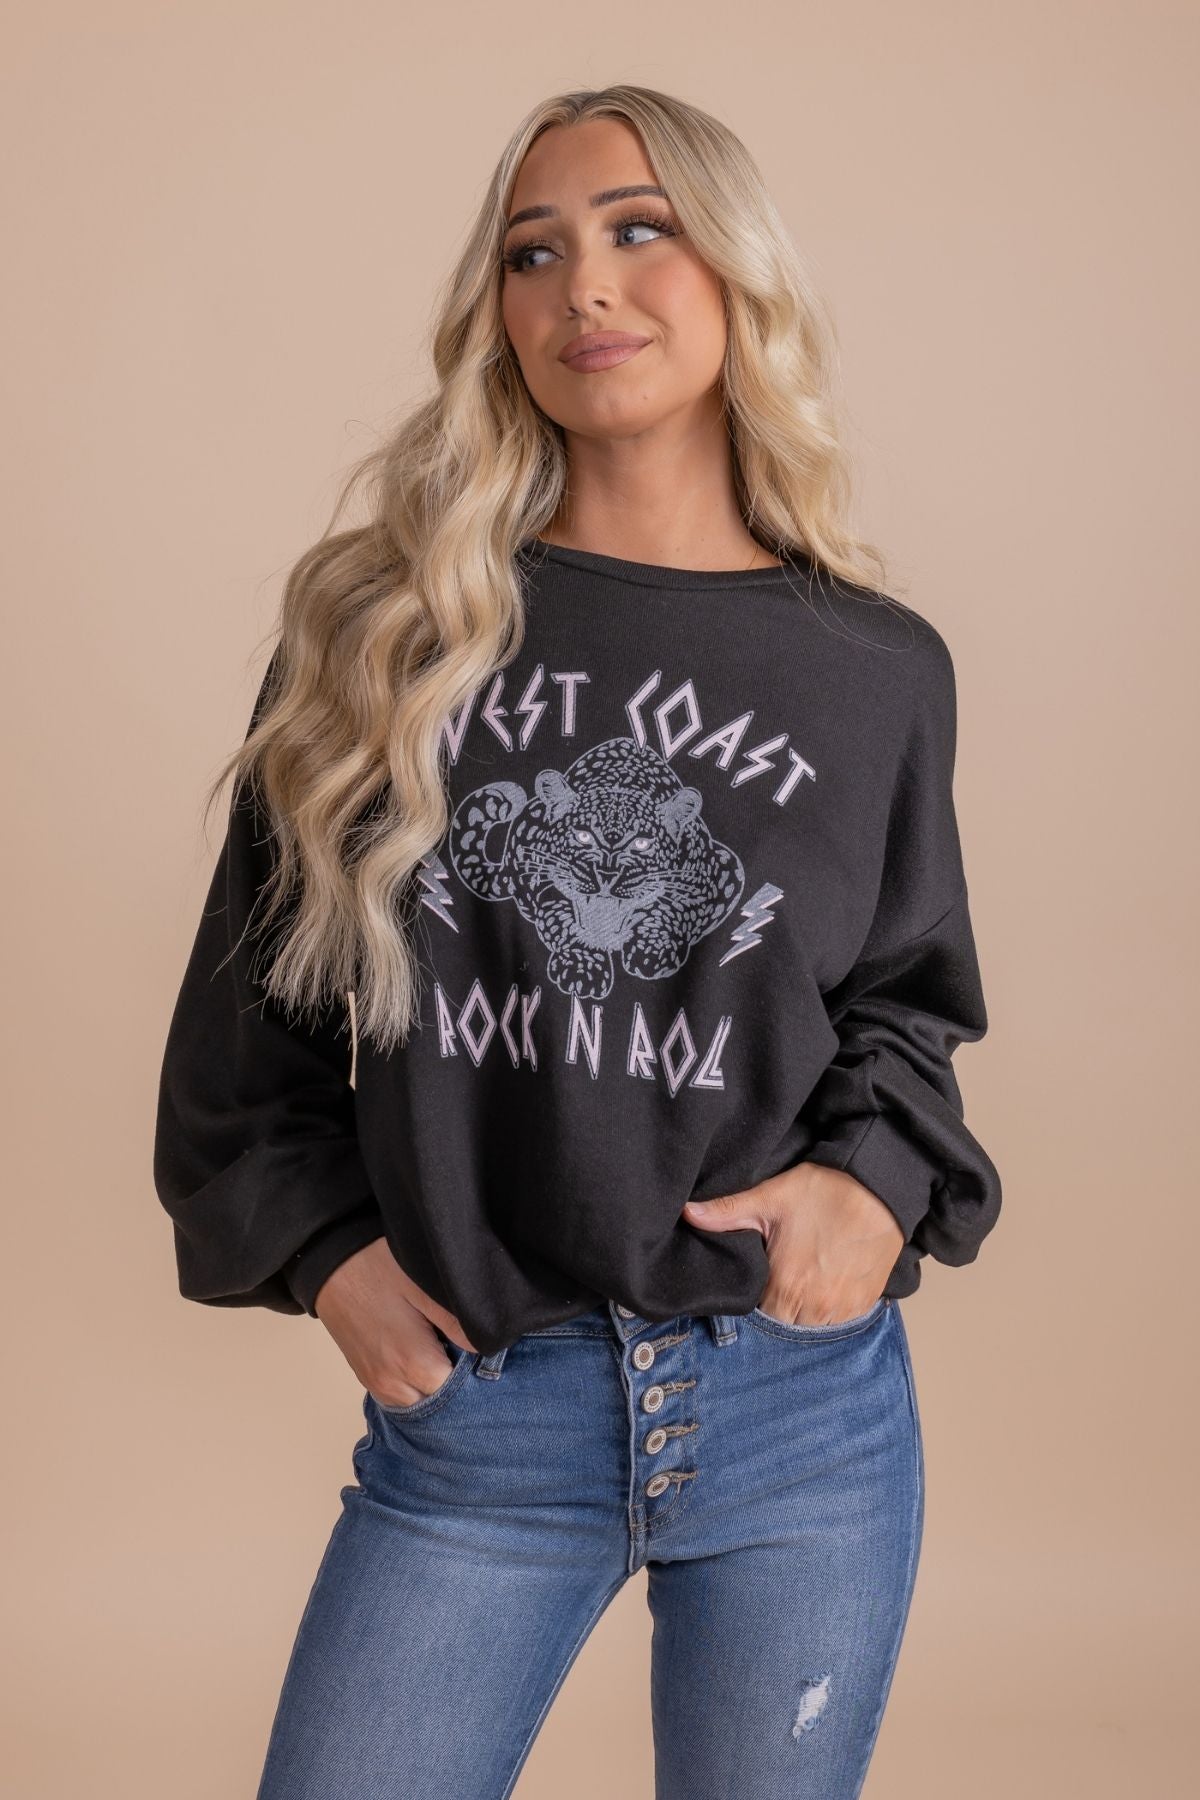 Womens Graphic Oversized Sweatshirt "west coast rock n roll"